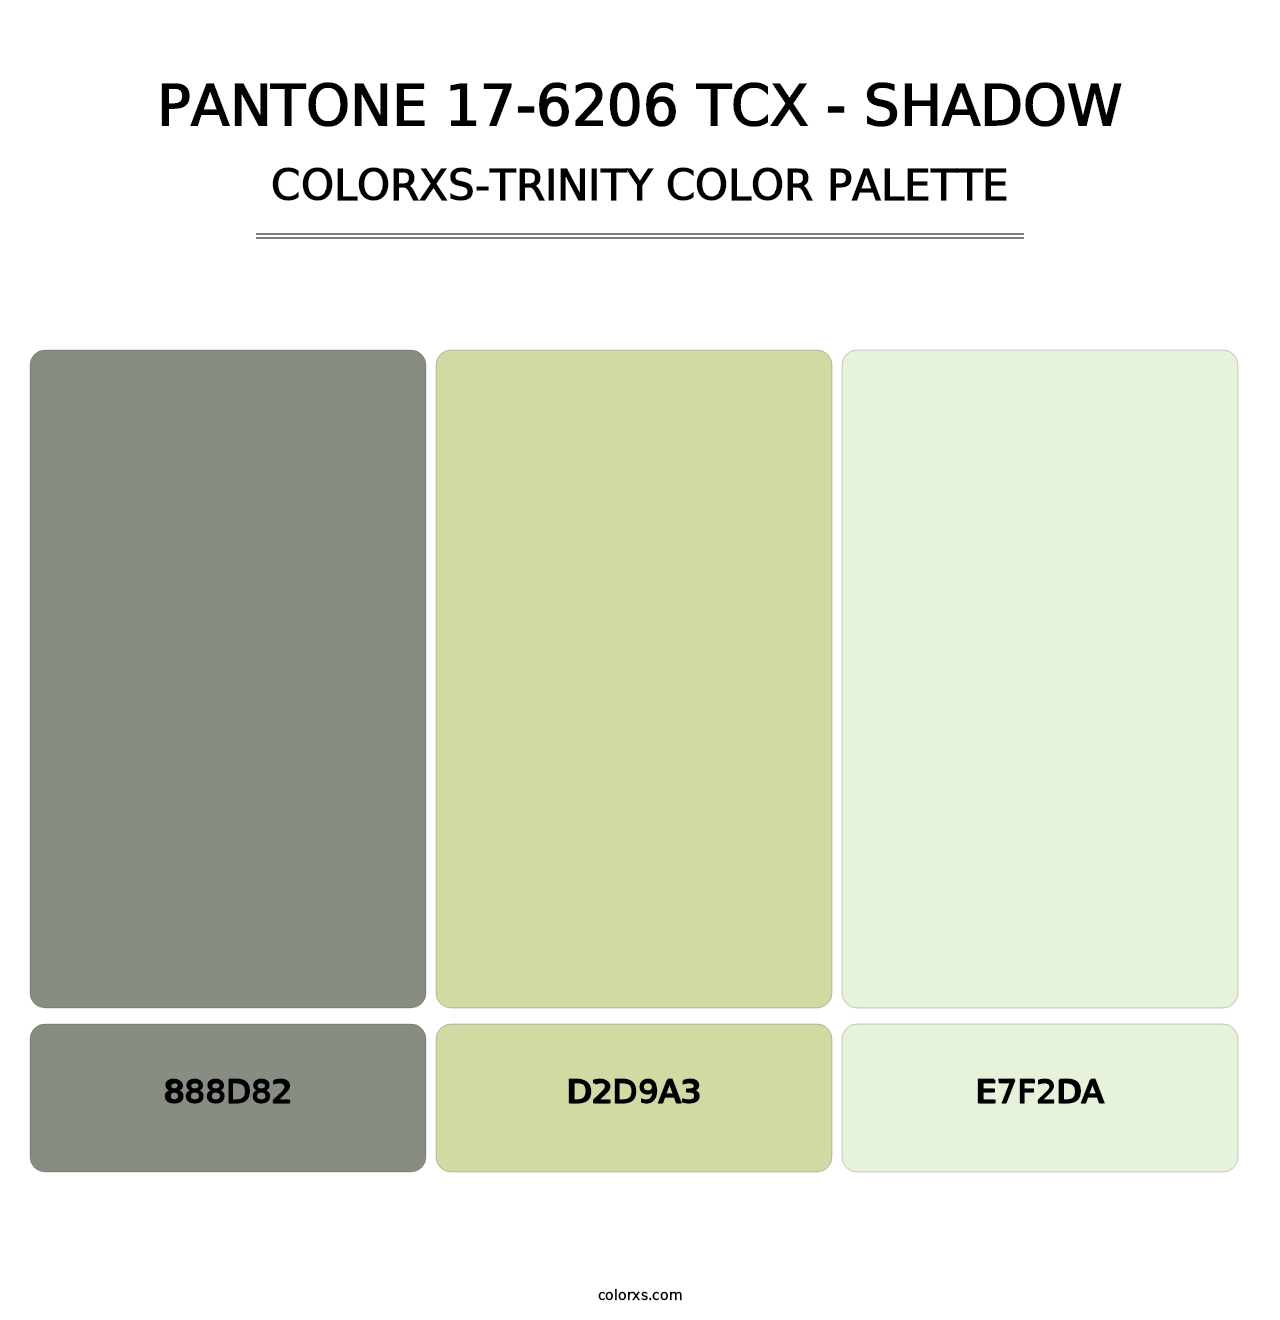 PANTONE 17-6206 TCX - Shadow - Colorxs Trinity Palette